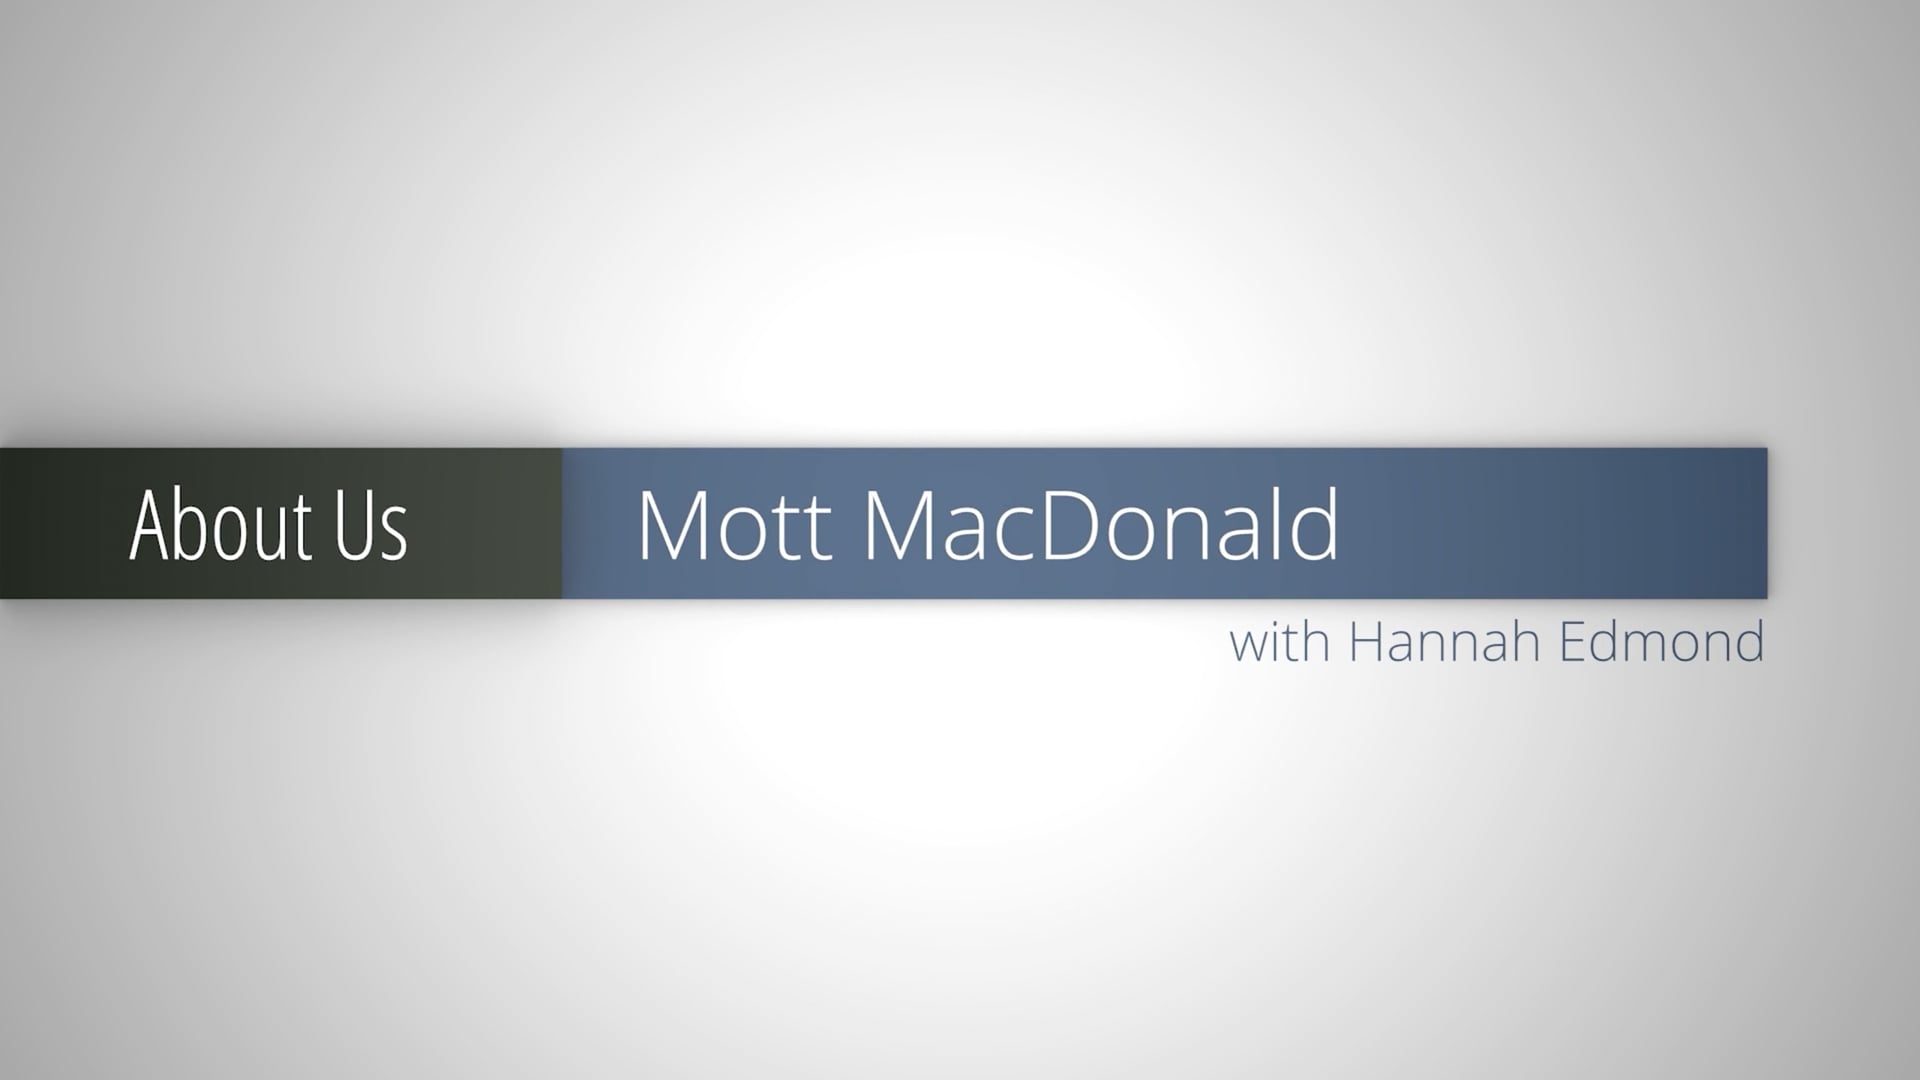 Introducing Mott MacDonald